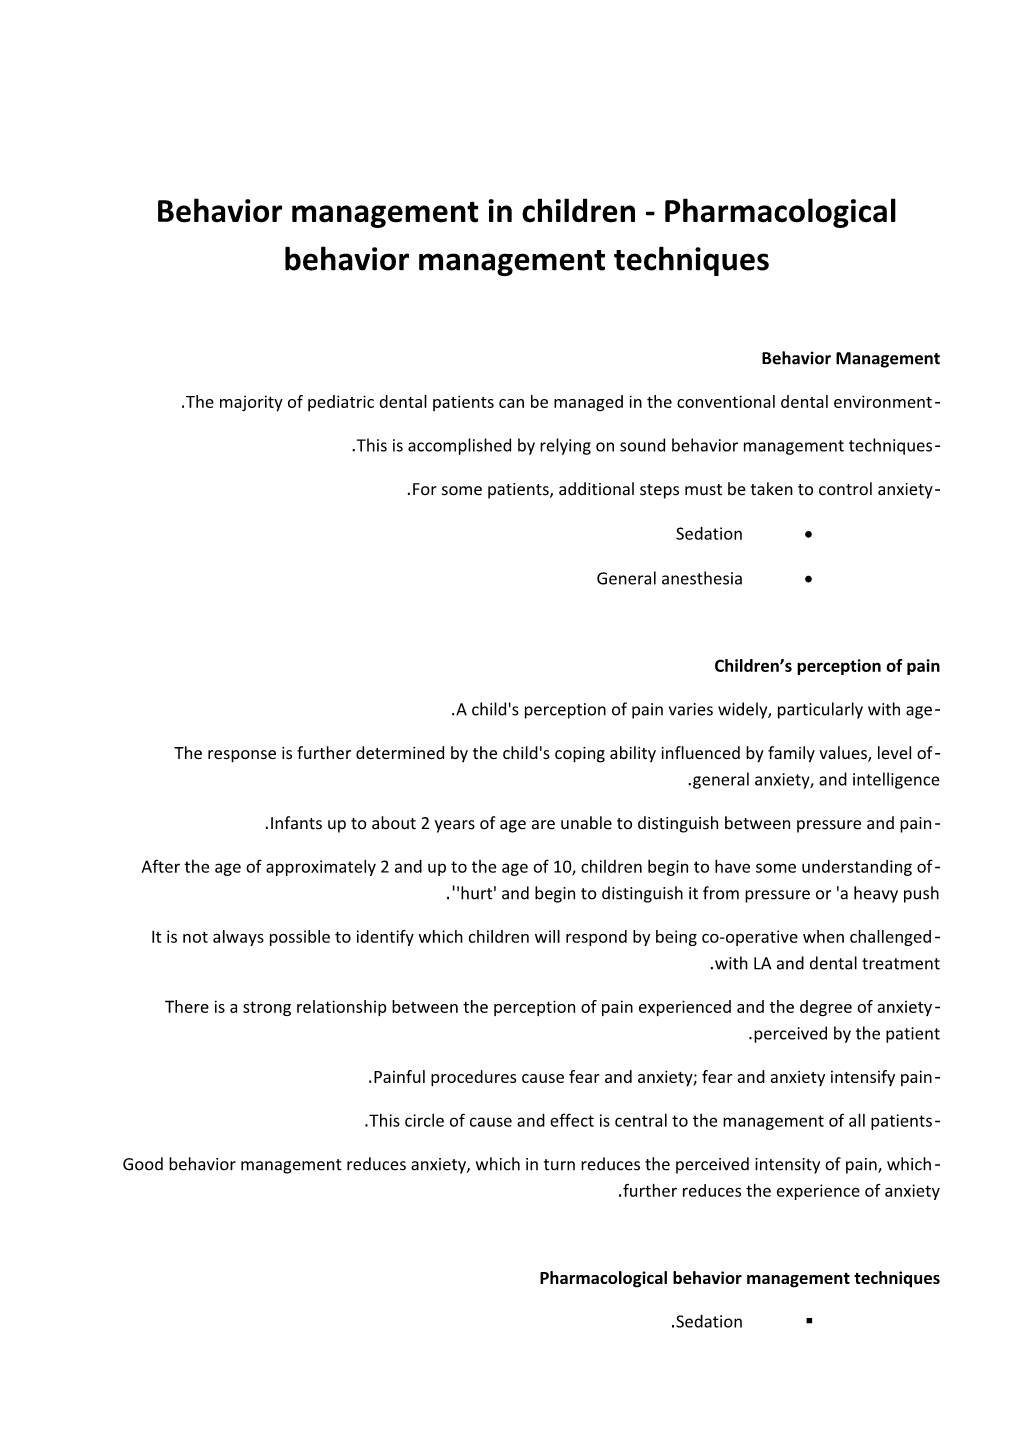 Behavior Management in Children - Pharmacological Behavior Management Techniques